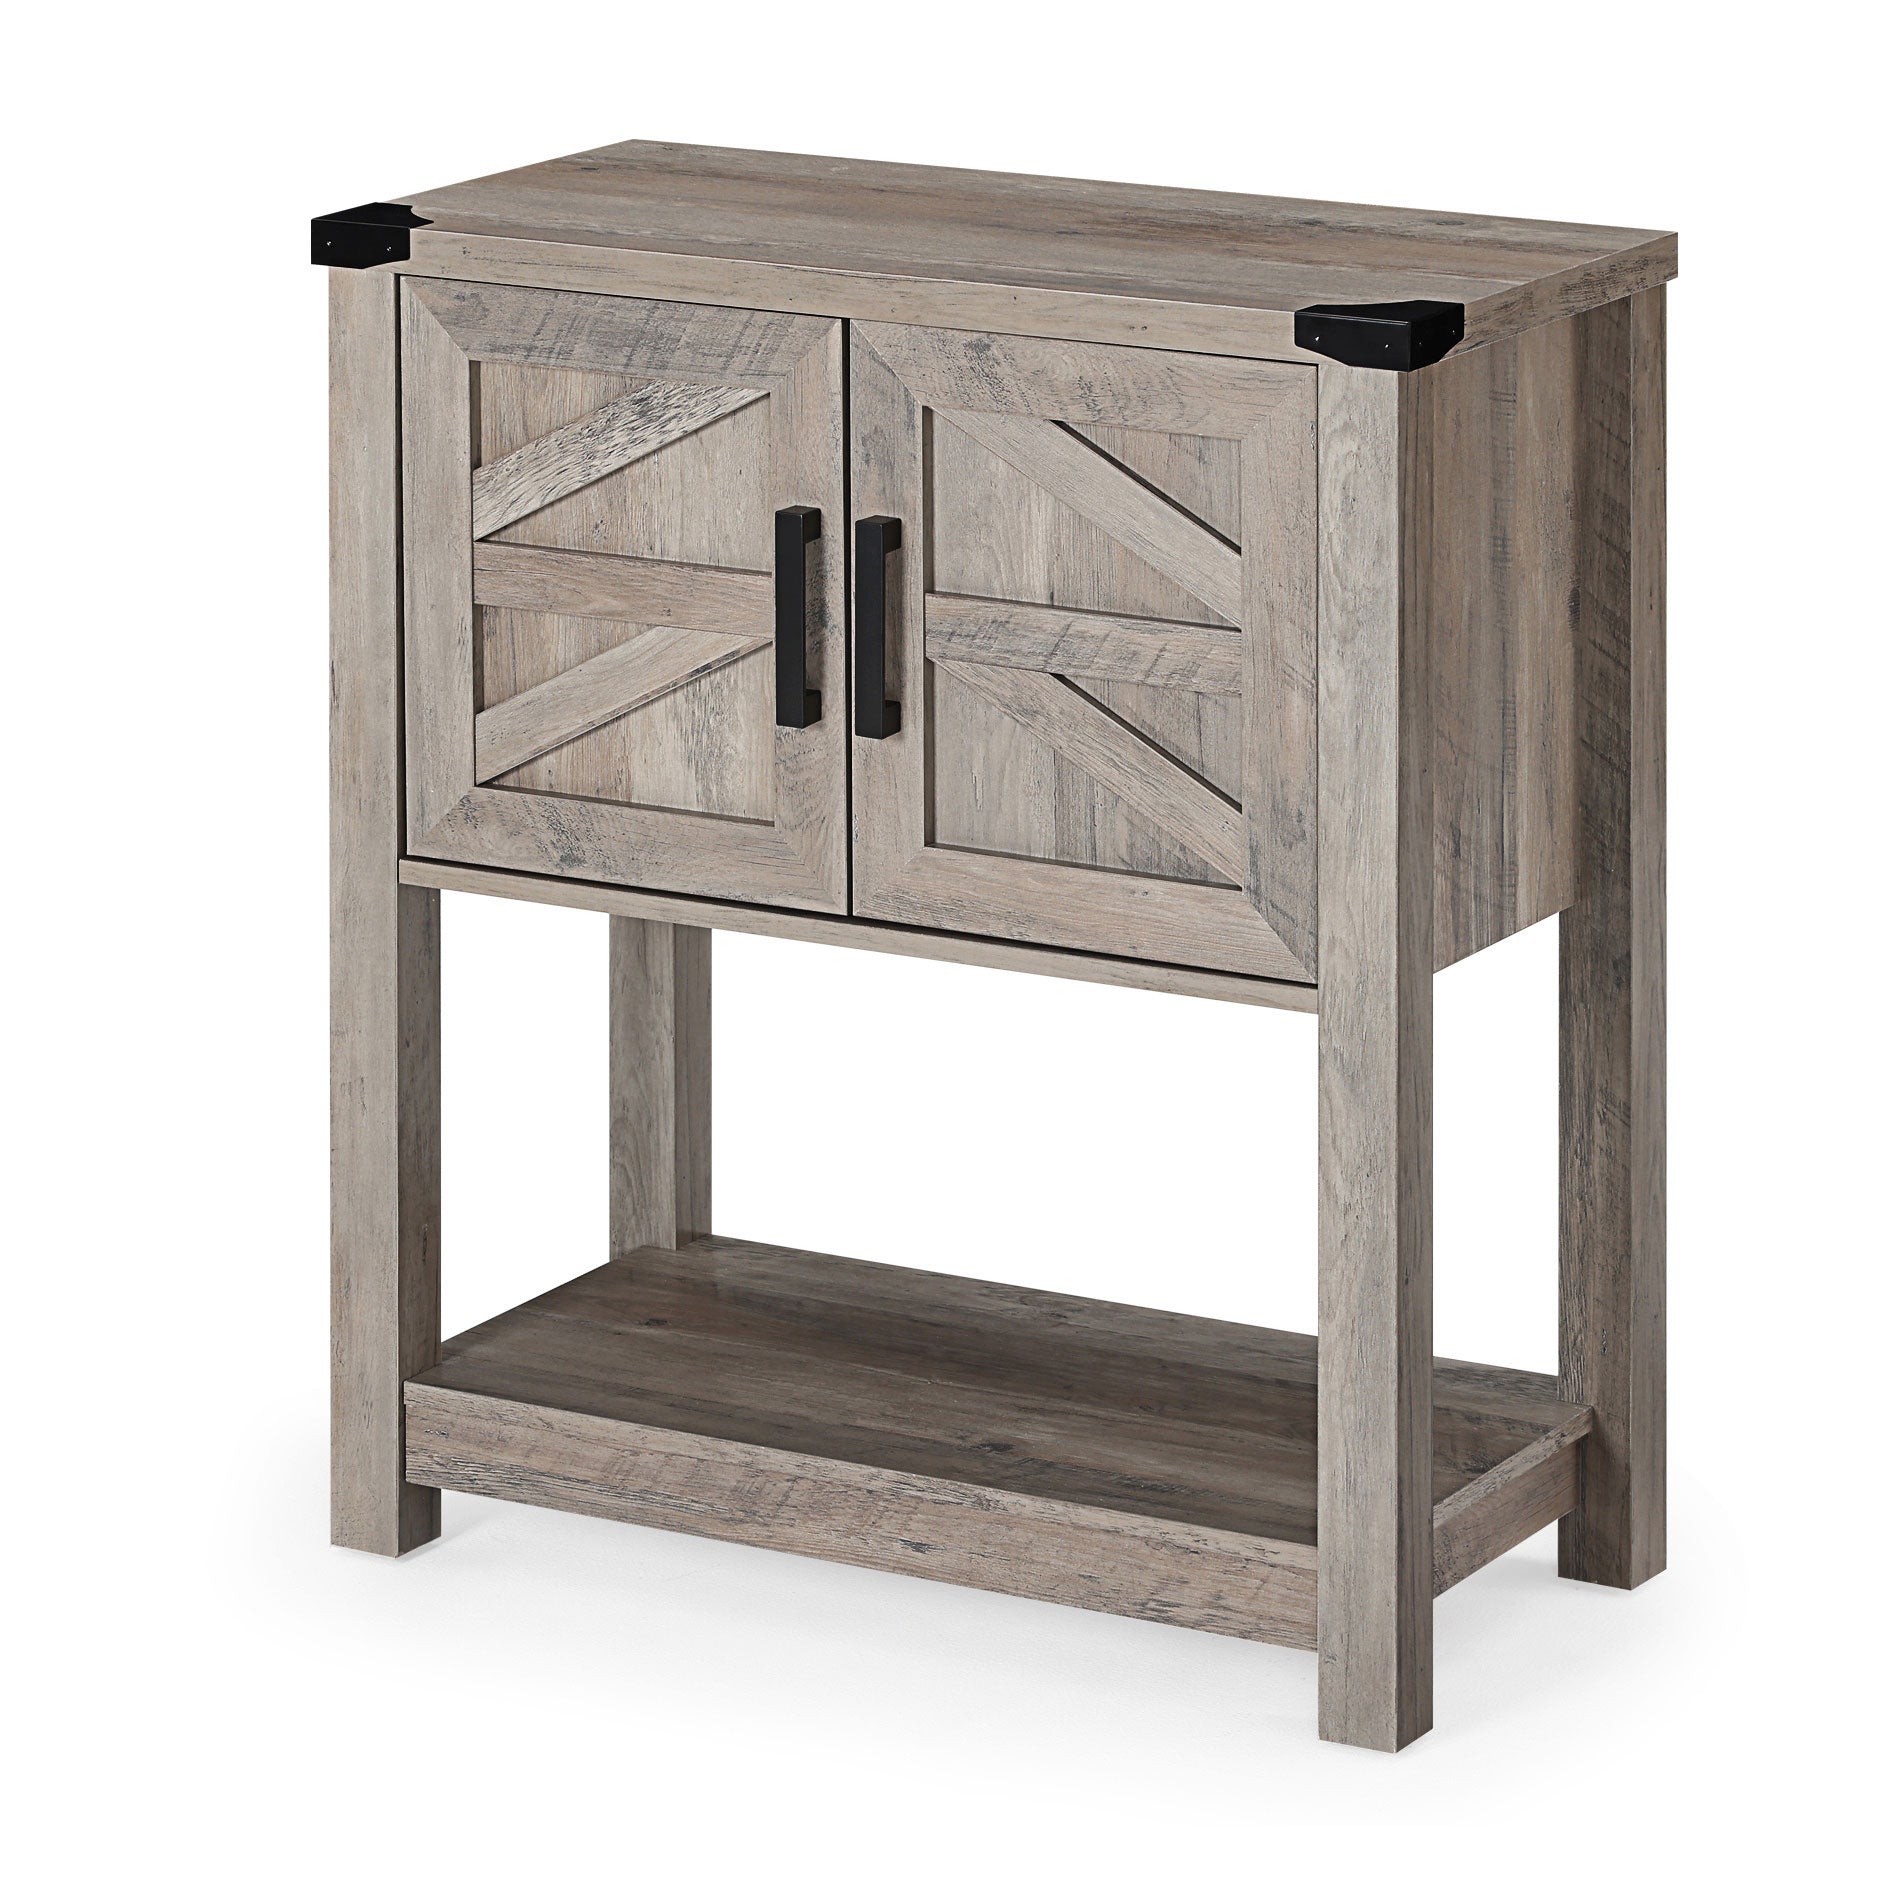 WAMPAT 16" Modern Farmhouse Buffet Cabinet, Wood Sideboard with Cabinet & Open Storage, Blue LED Light, Wash Grey